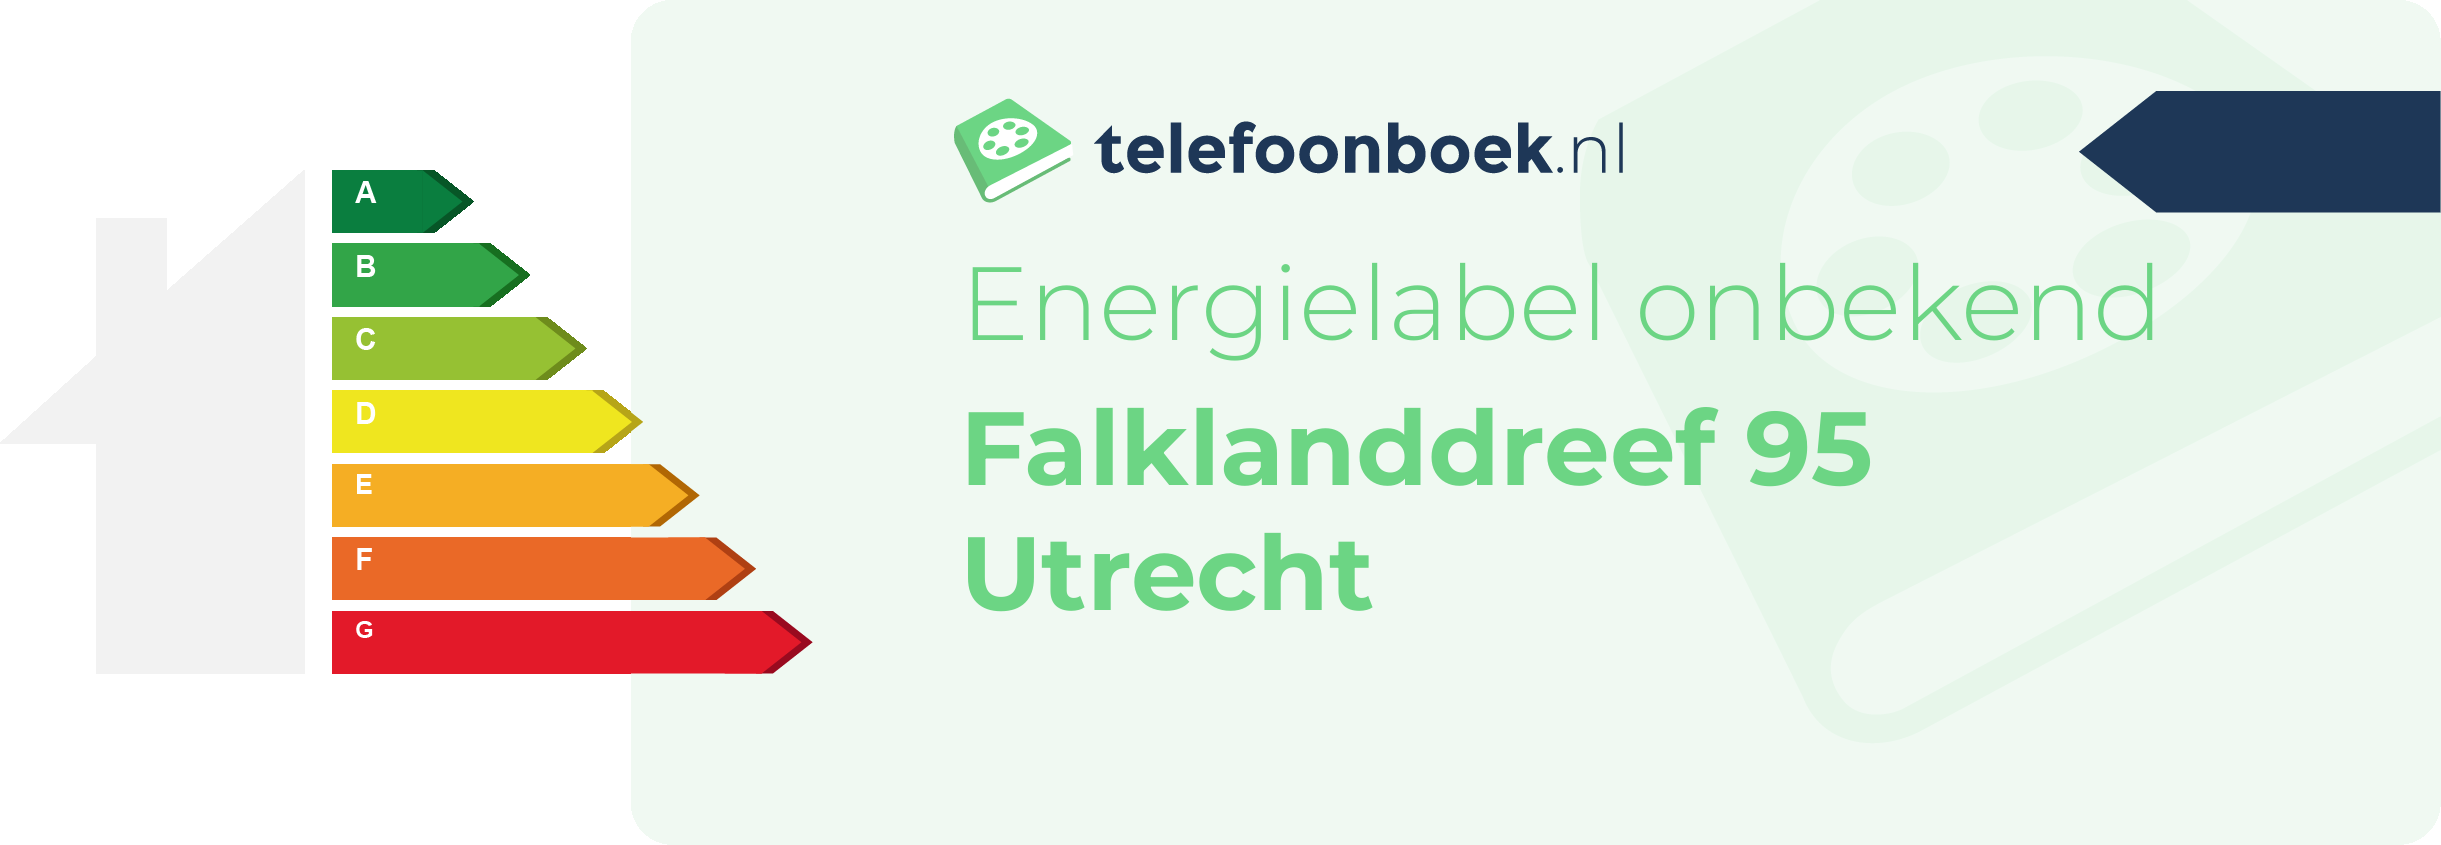 Energielabel Falklanddreef 95 Utrecht